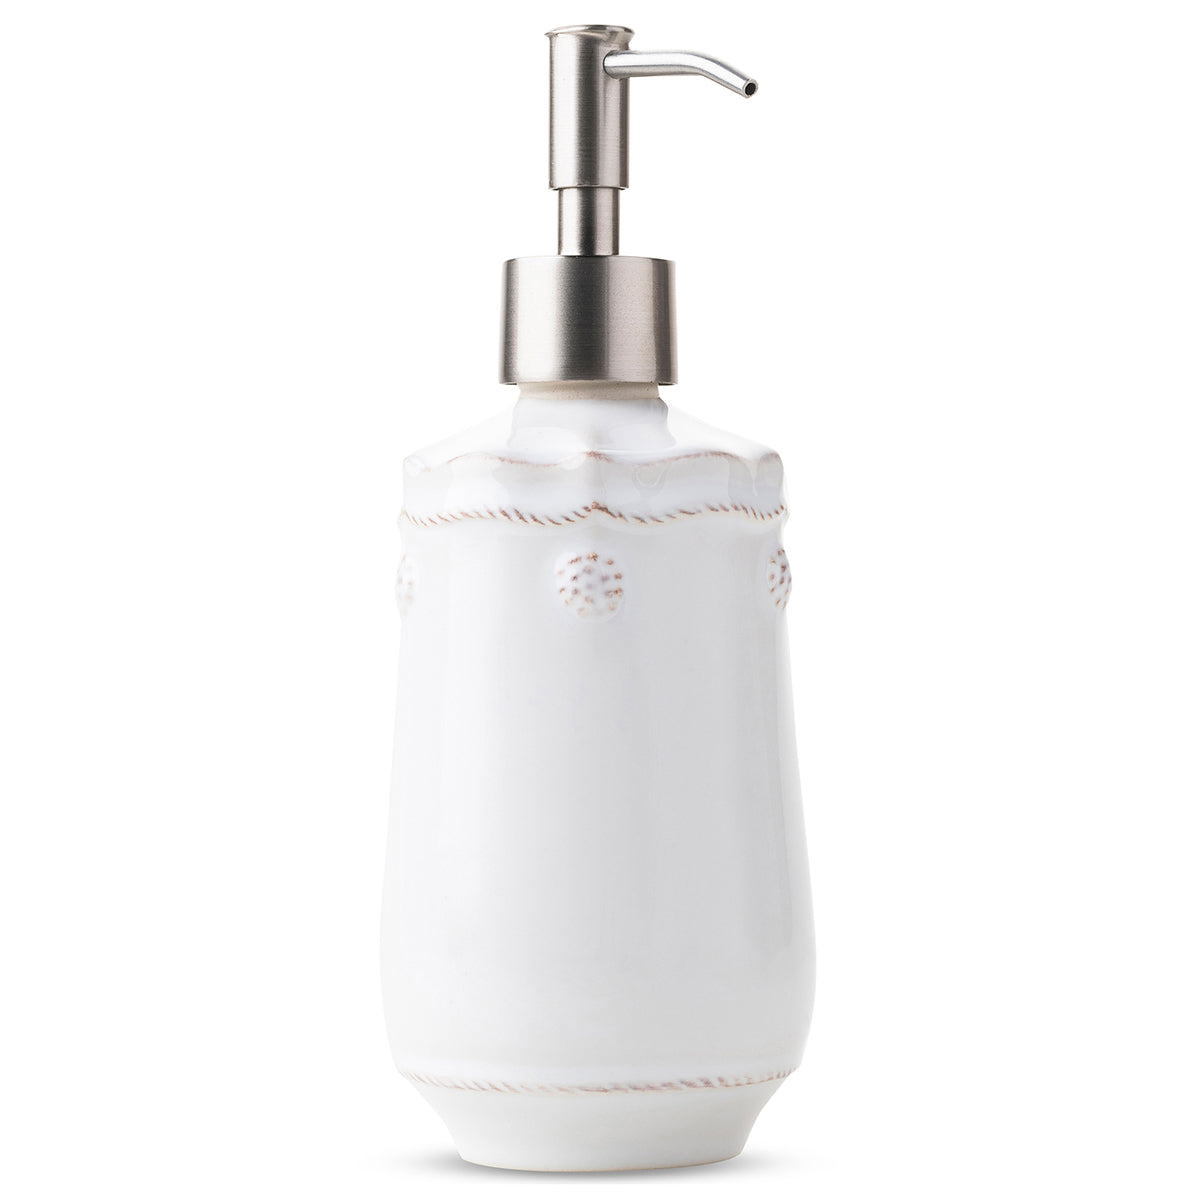 Berry & Thread Whitewash 
Soap/Lotion Dispenser